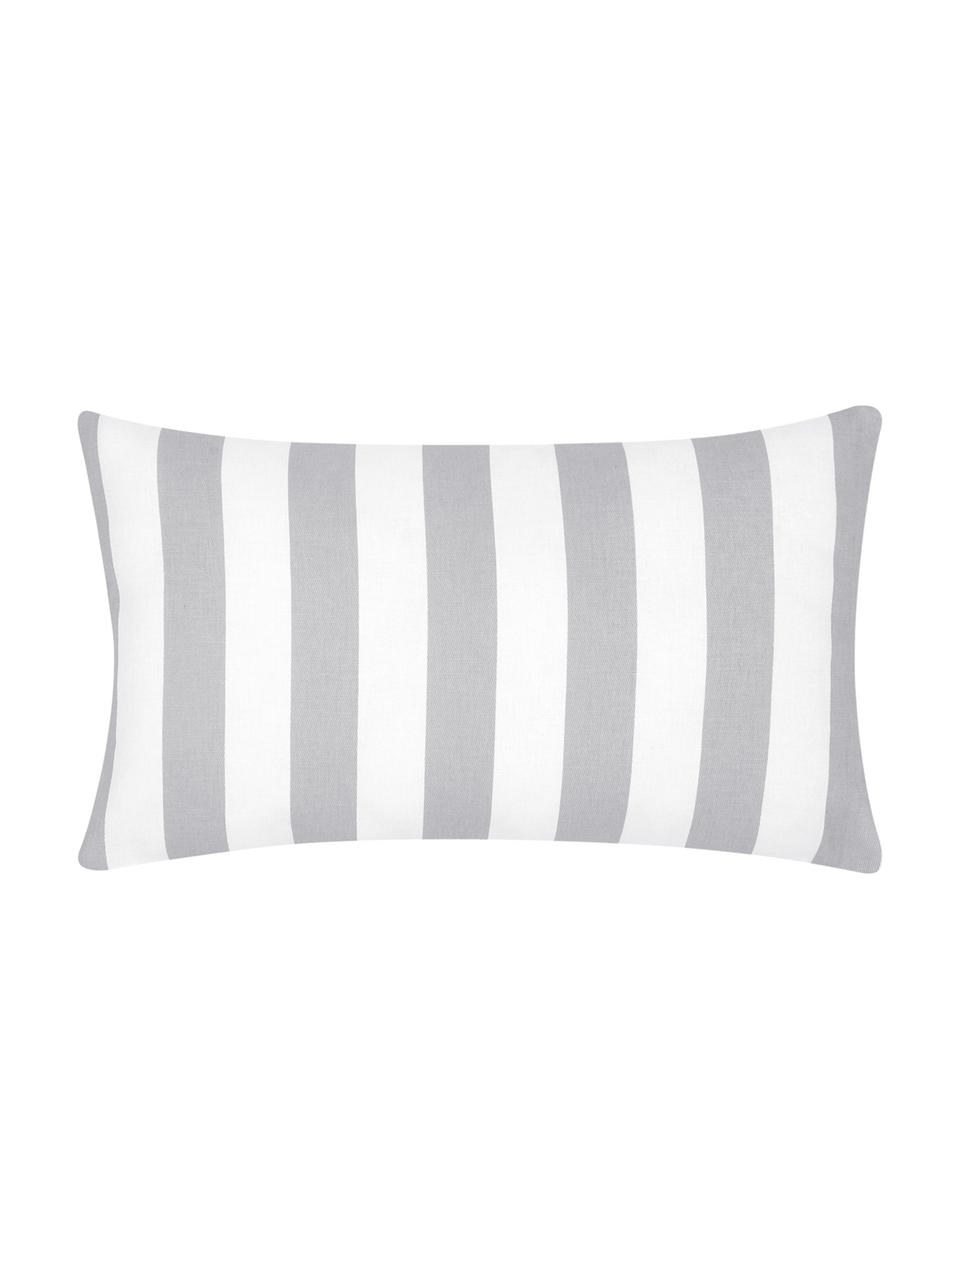 Gestreifte Kissenhülle Timon in Grau/Weiß, 100% Baumwolle, Hellgrau, Weiß, 30 x 50 cm